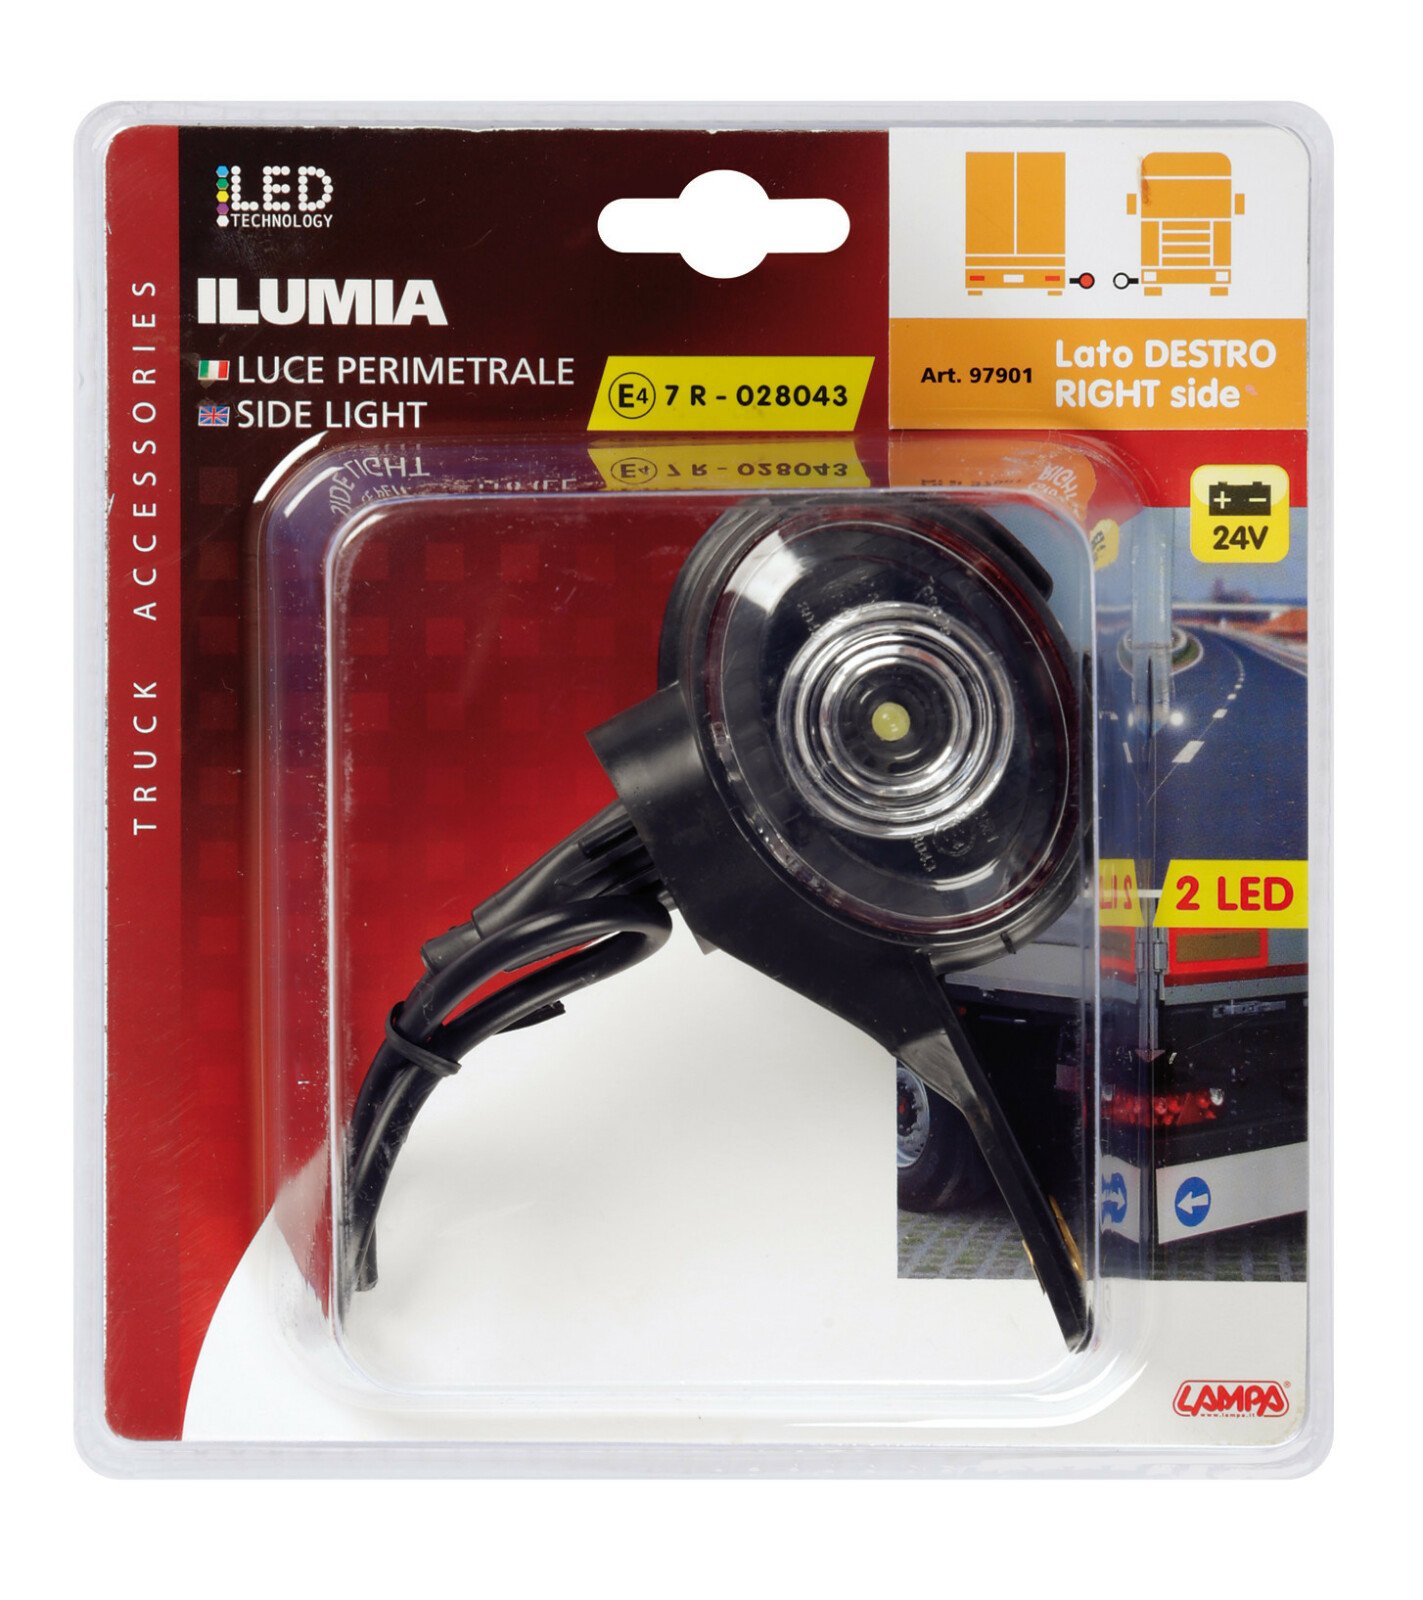 Ilumia, side light, 2 Led, 24V - Right thumb